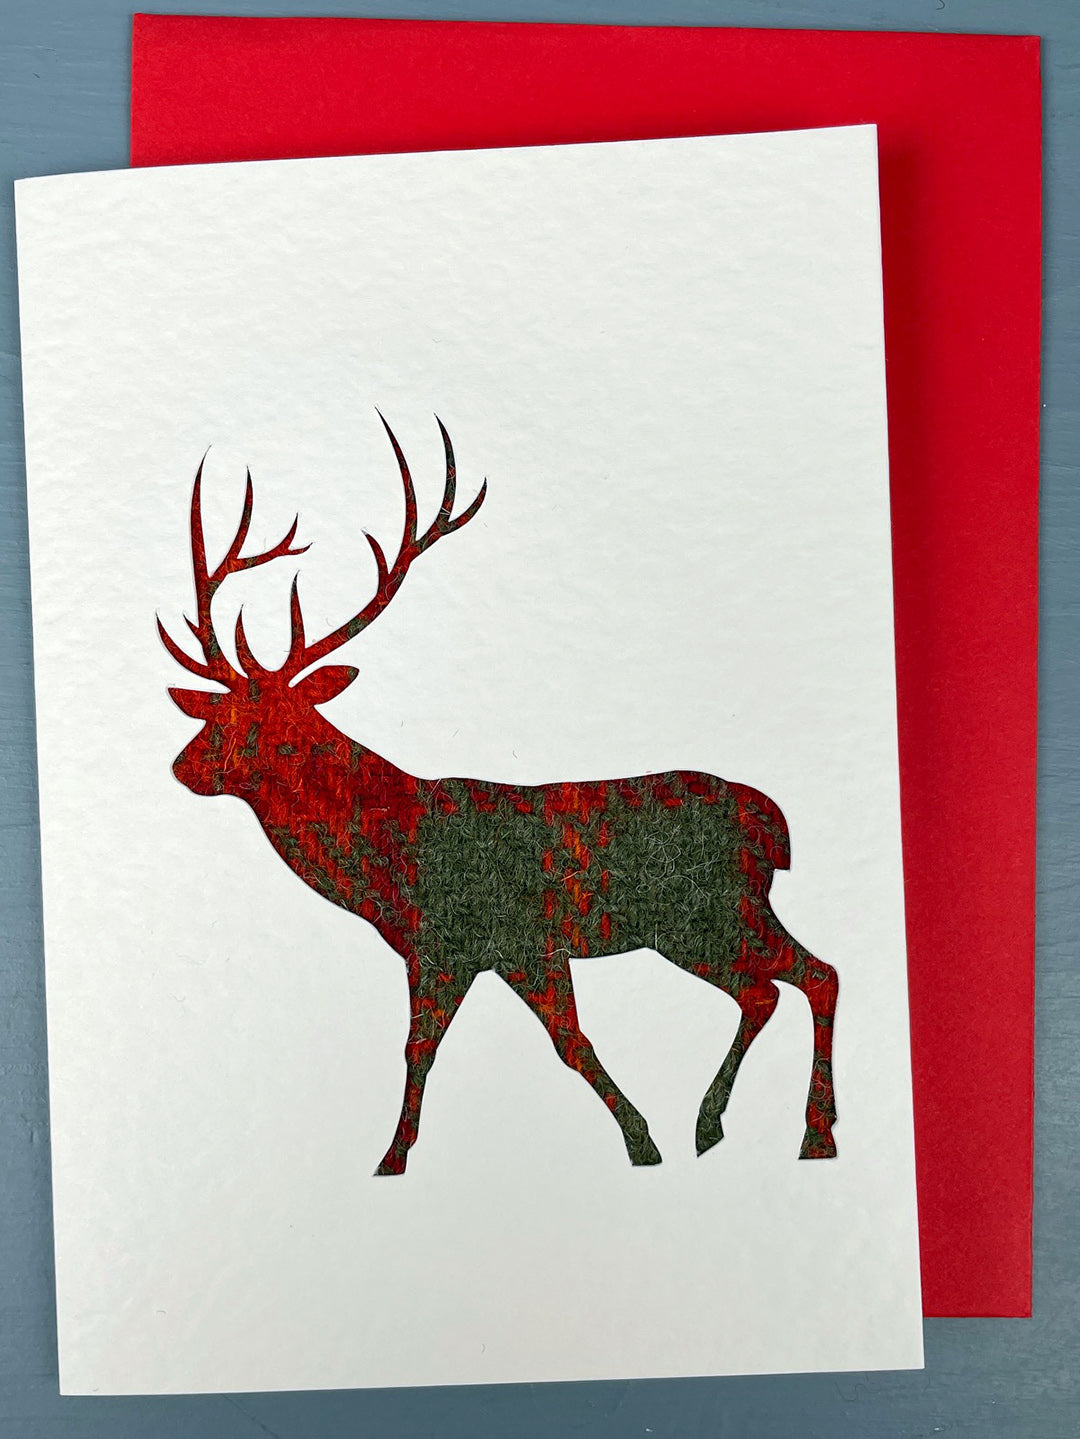 Handmade greetings card by Weaving the Love featuring a red deer stag in red Harris Tweed.